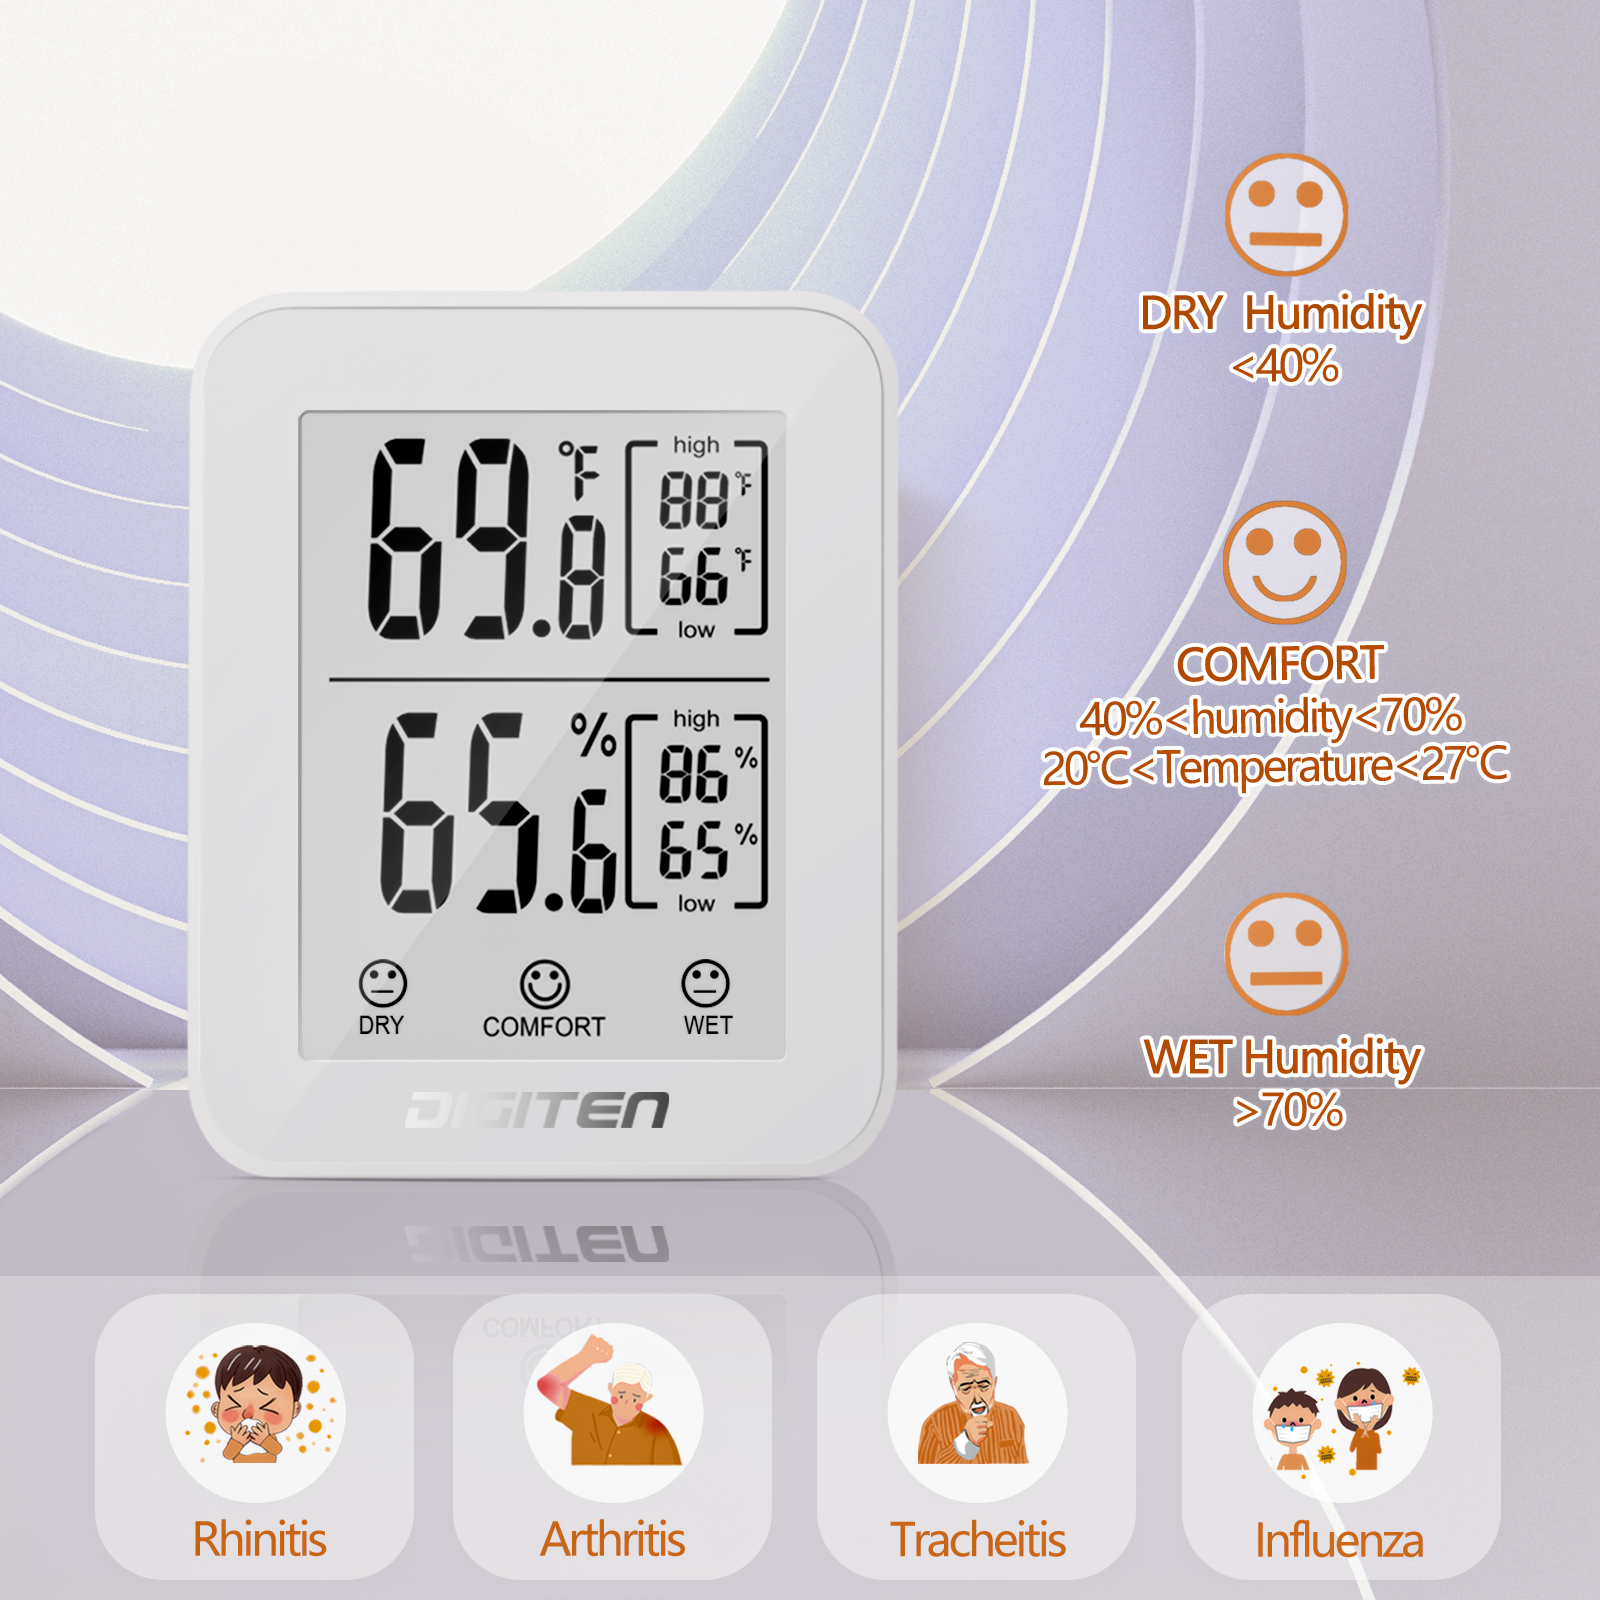 Humidity Gauge Indoor Thermometer Hygrometer Humidity Meter